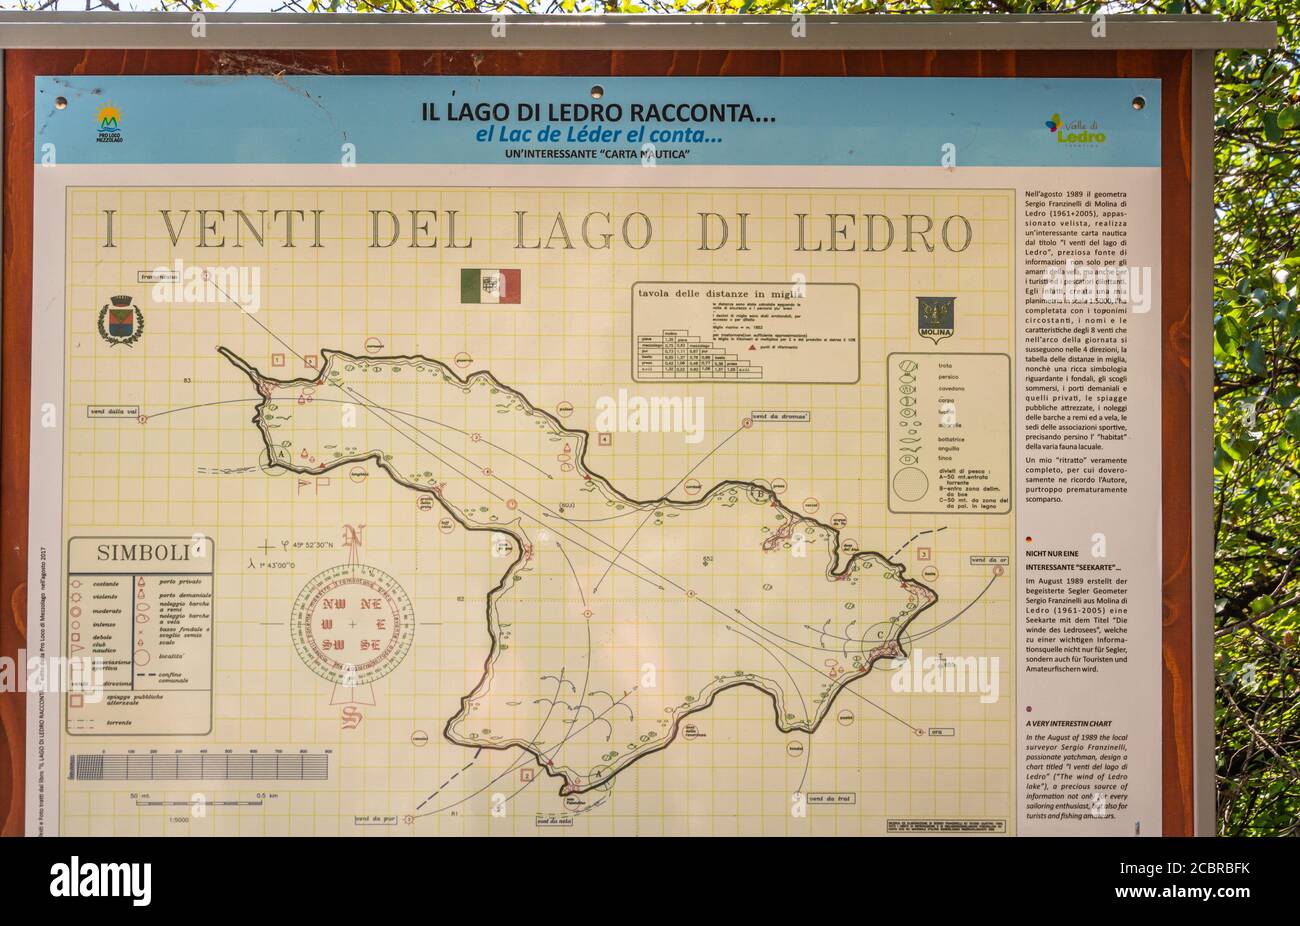 Information panels, signs and map at Lake Ledro, Valle di Ledro in Trentino Alto Adige, northern Italy Stock Photo